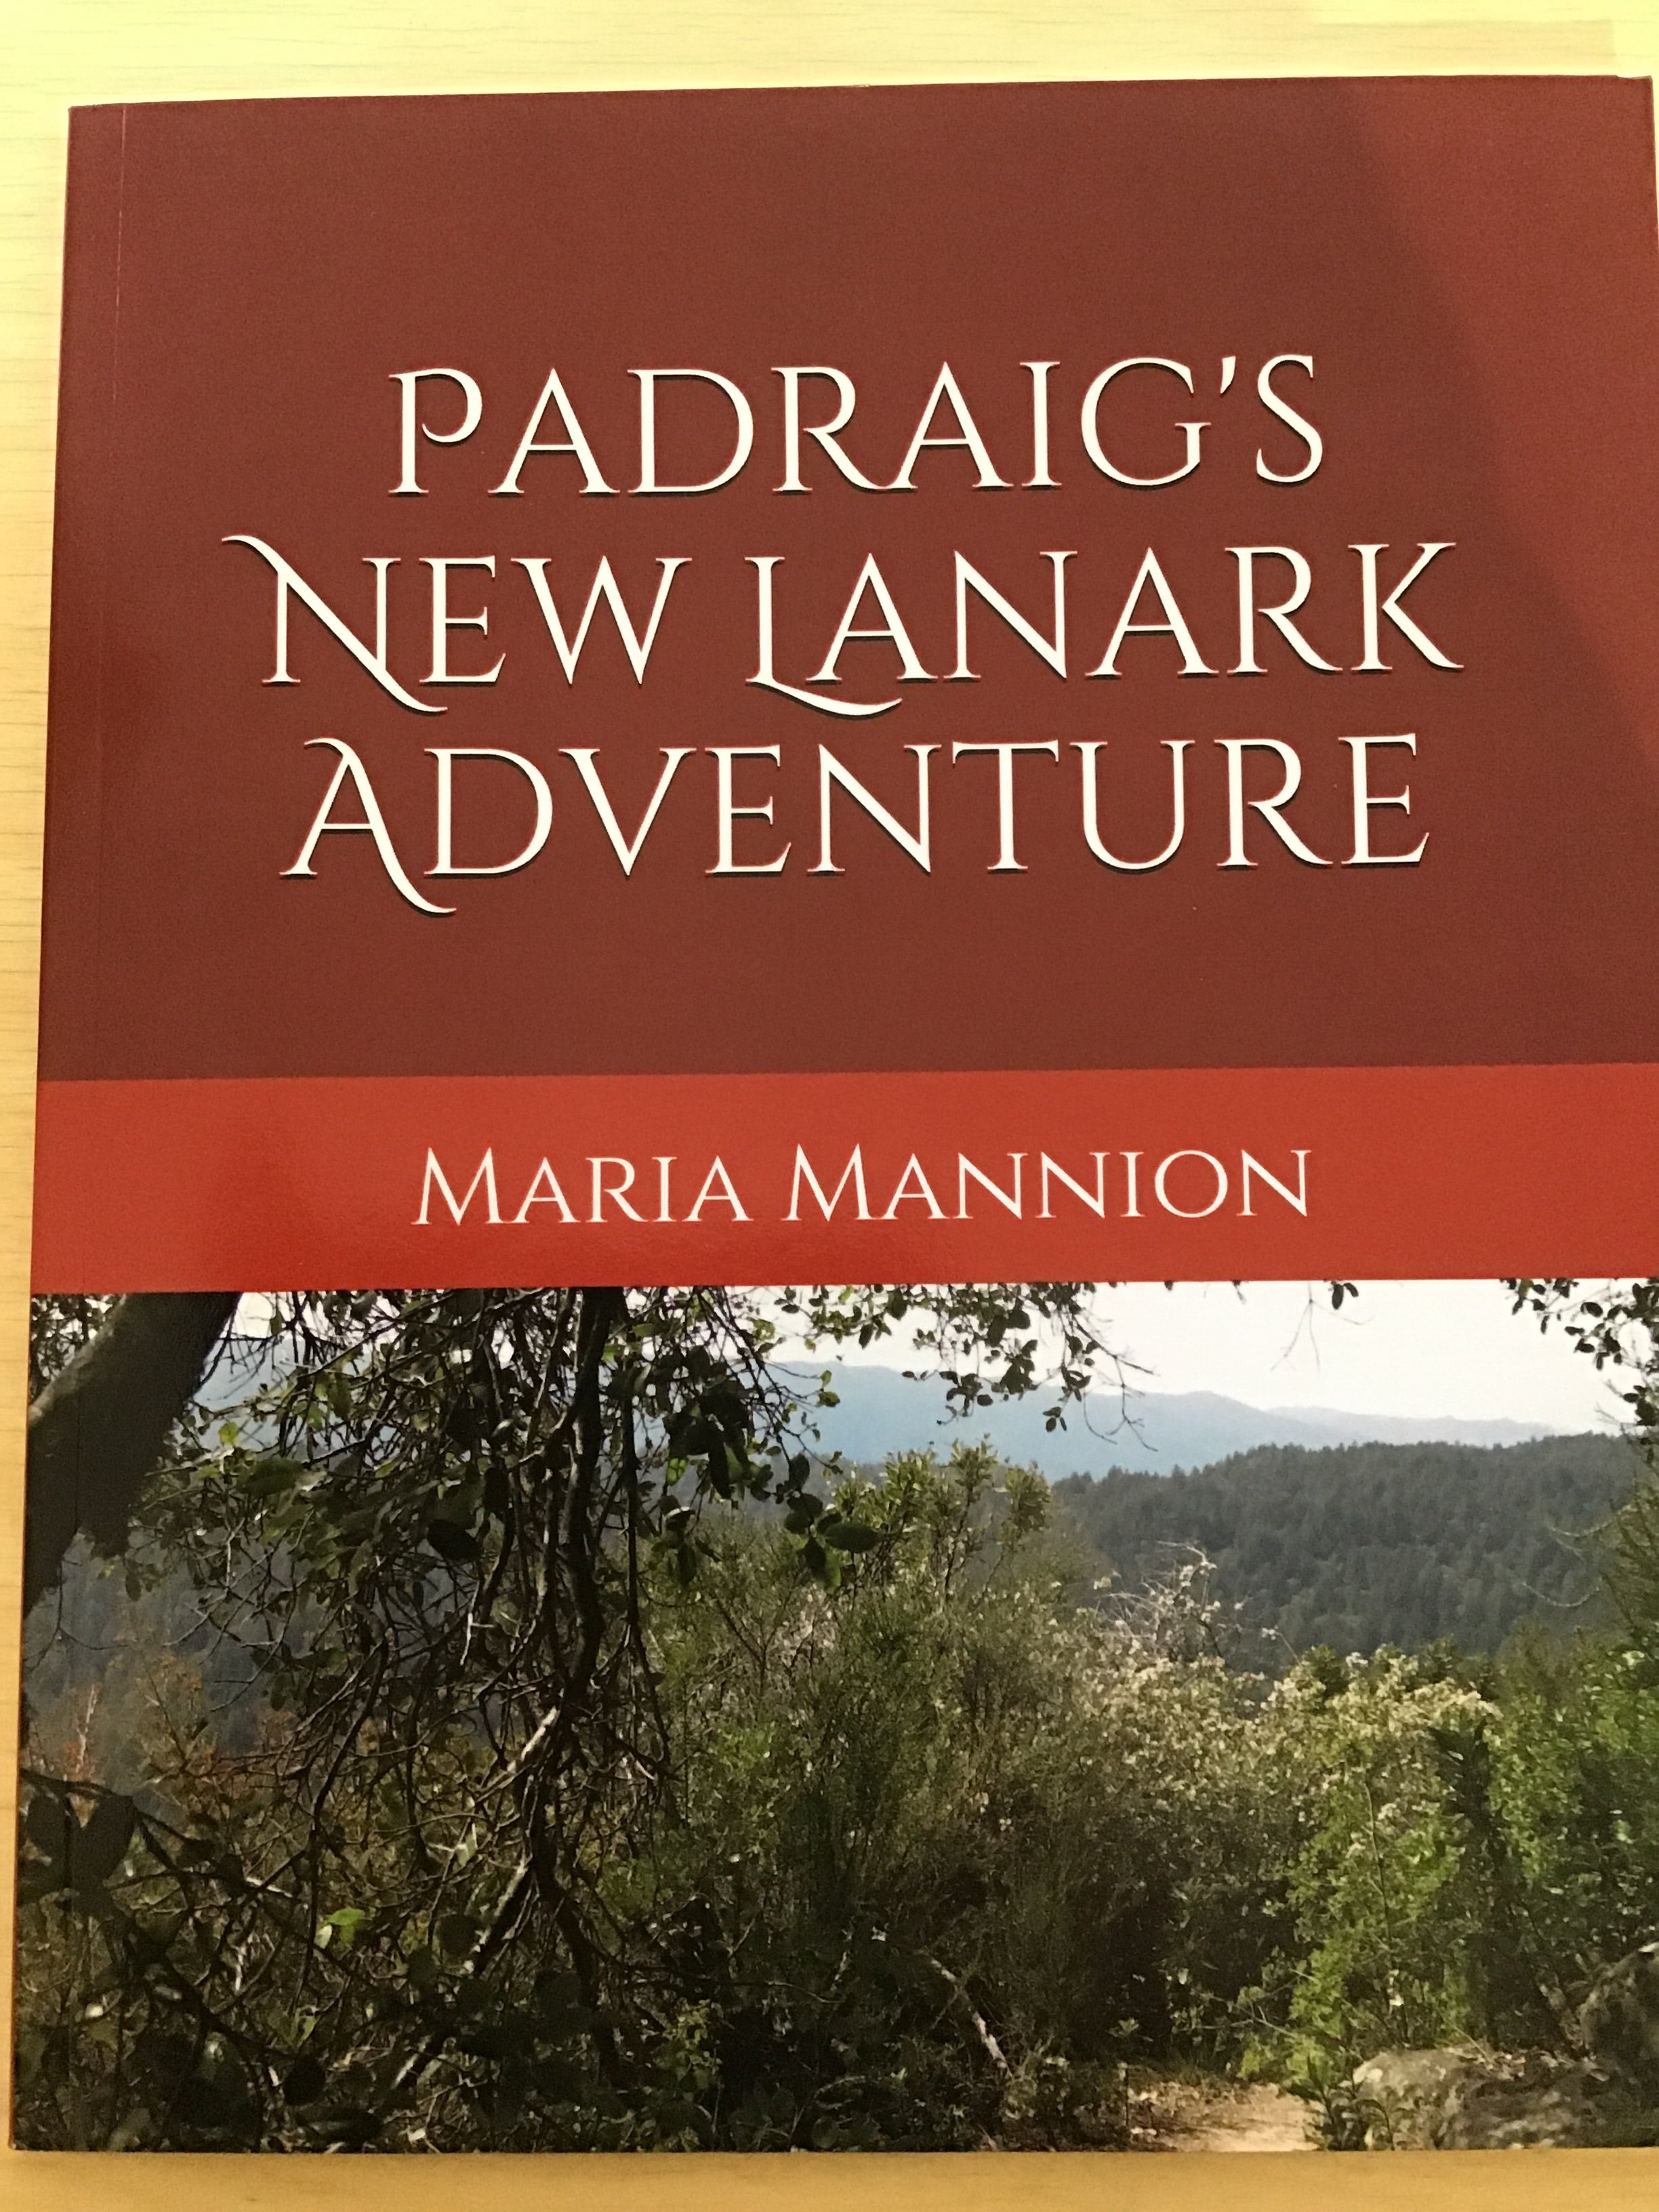 Book - Padraig’s New Lanark Adventure